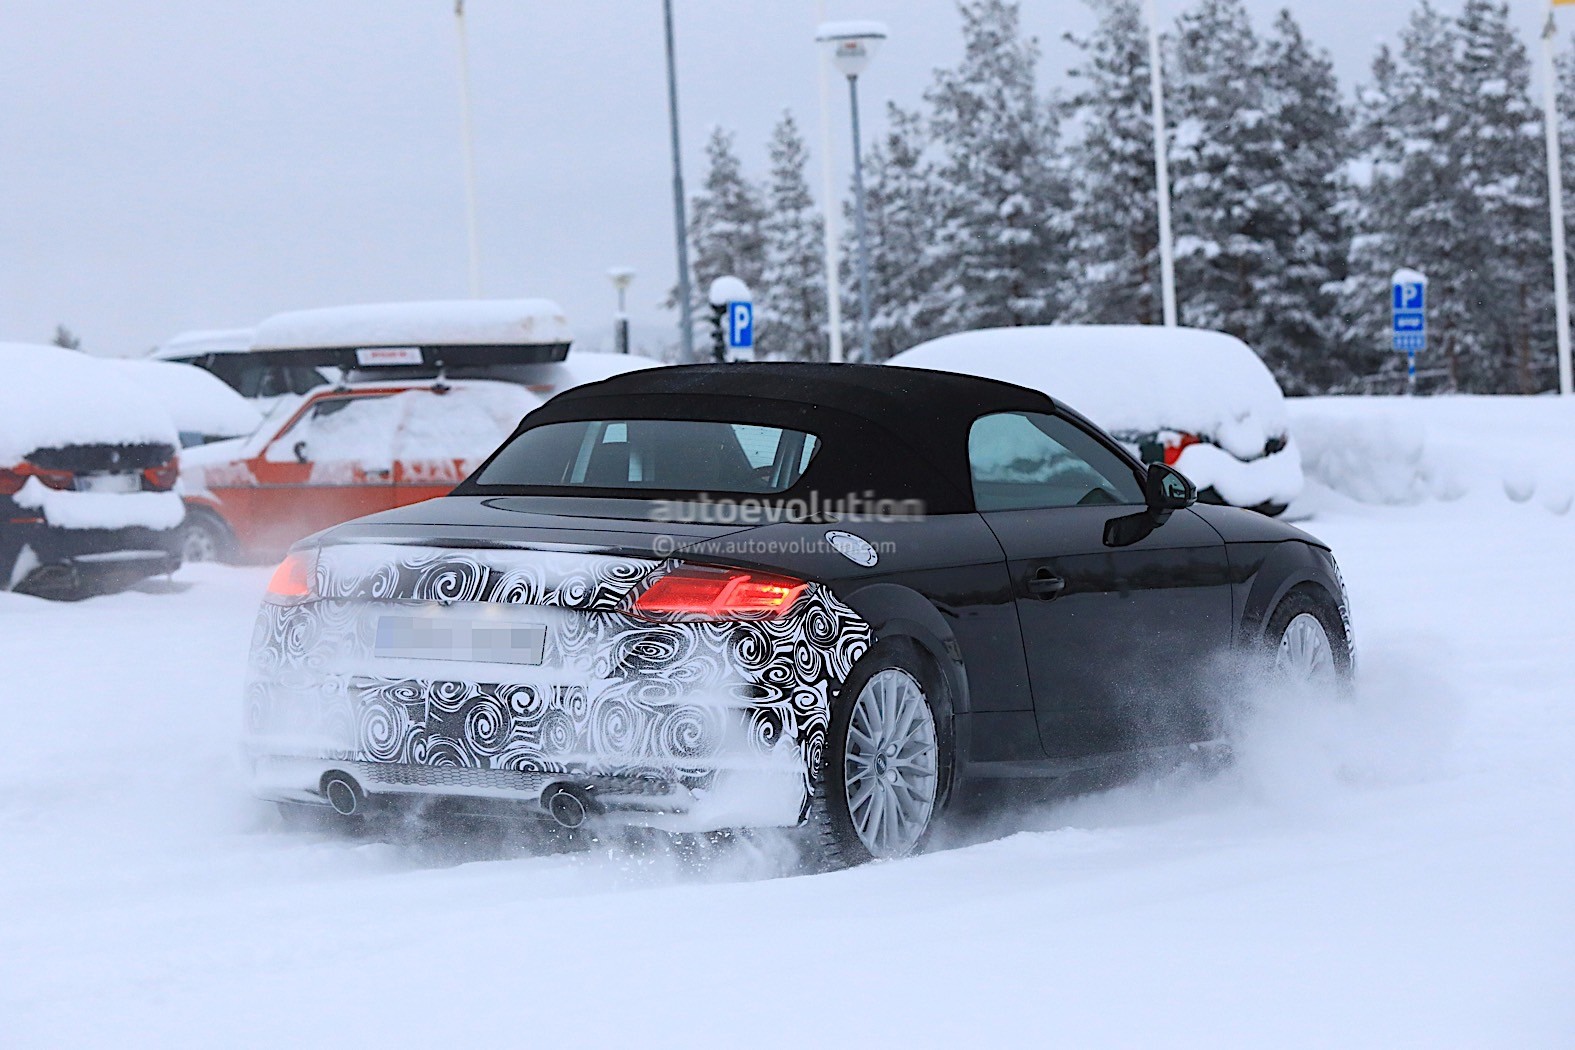 Audi TT Foto shoot using fake snow